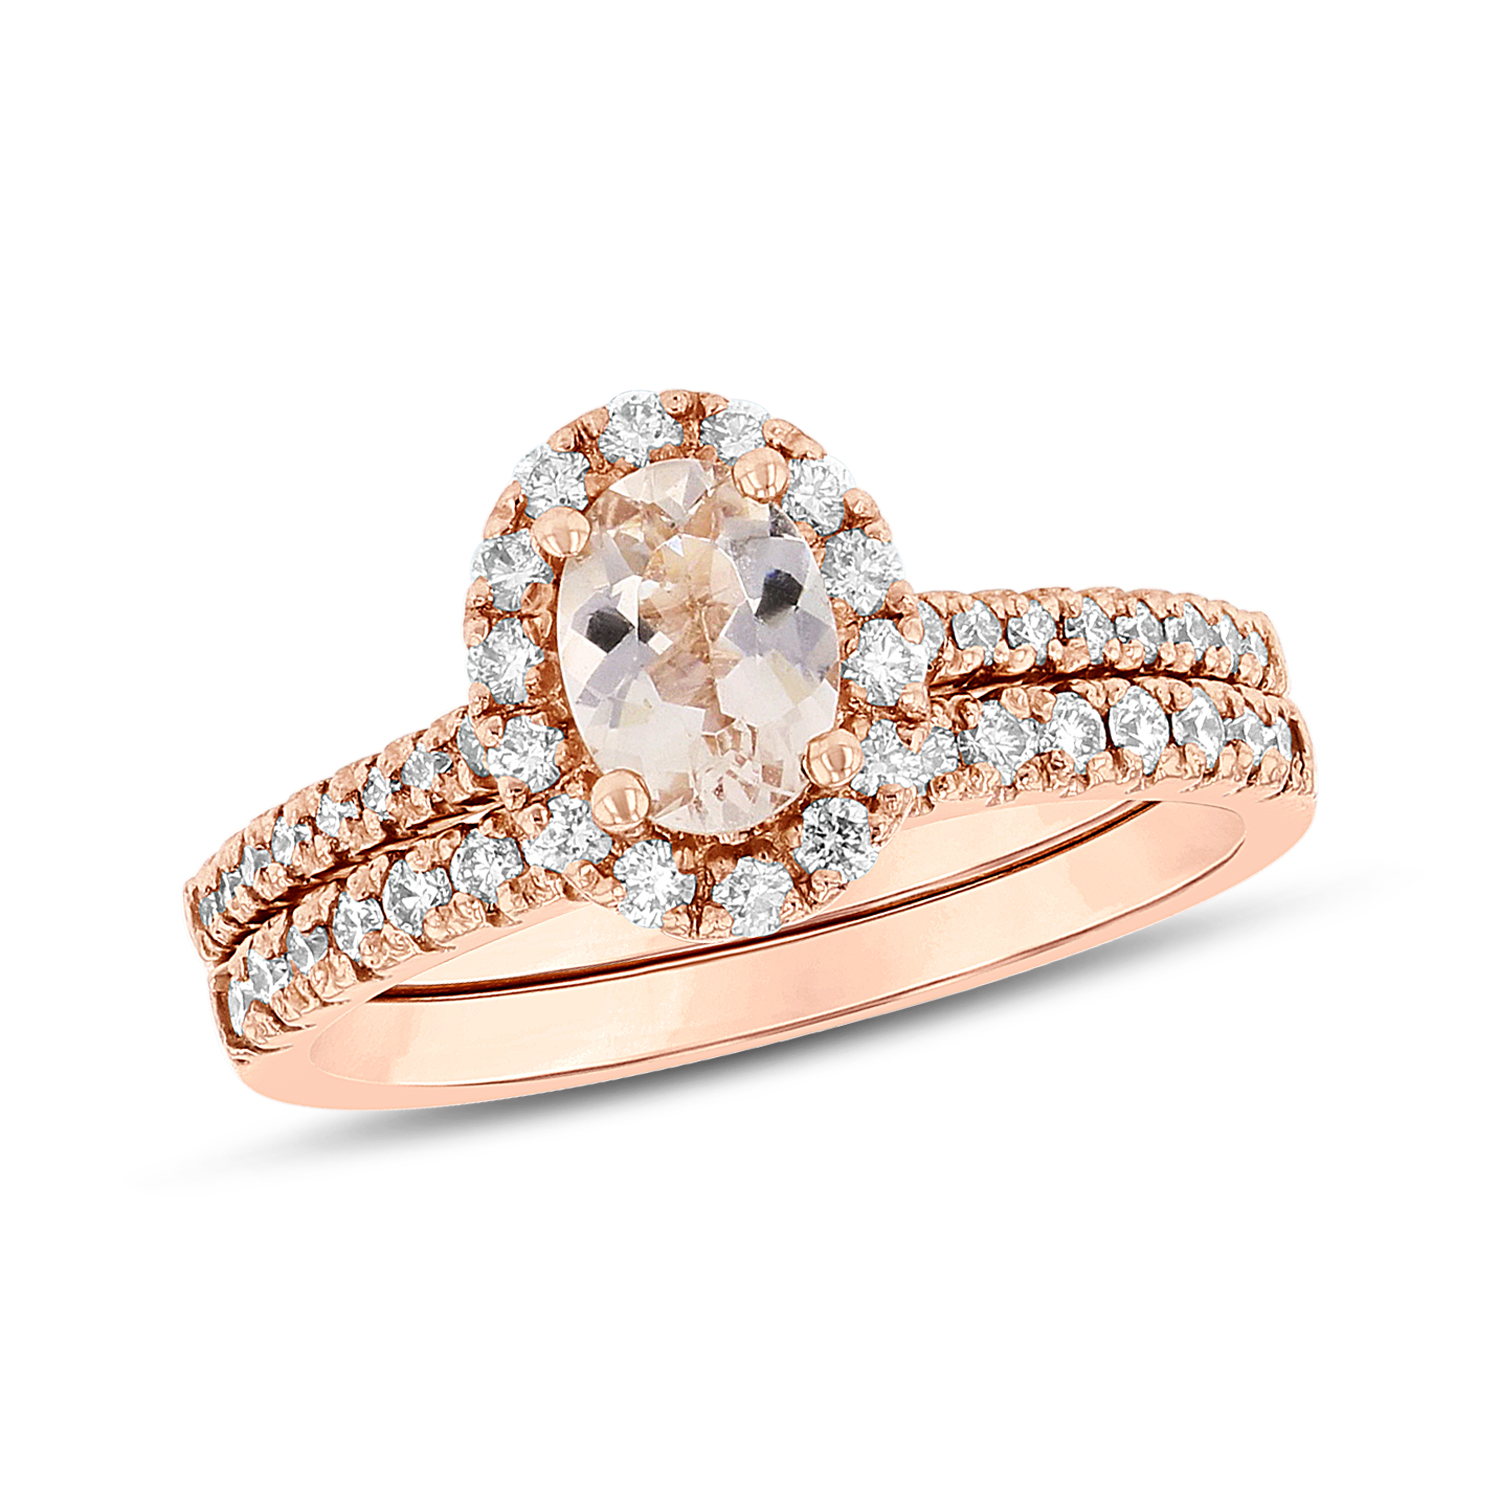 View Diamond and Morganite Engagement Ring Set in 14k RG